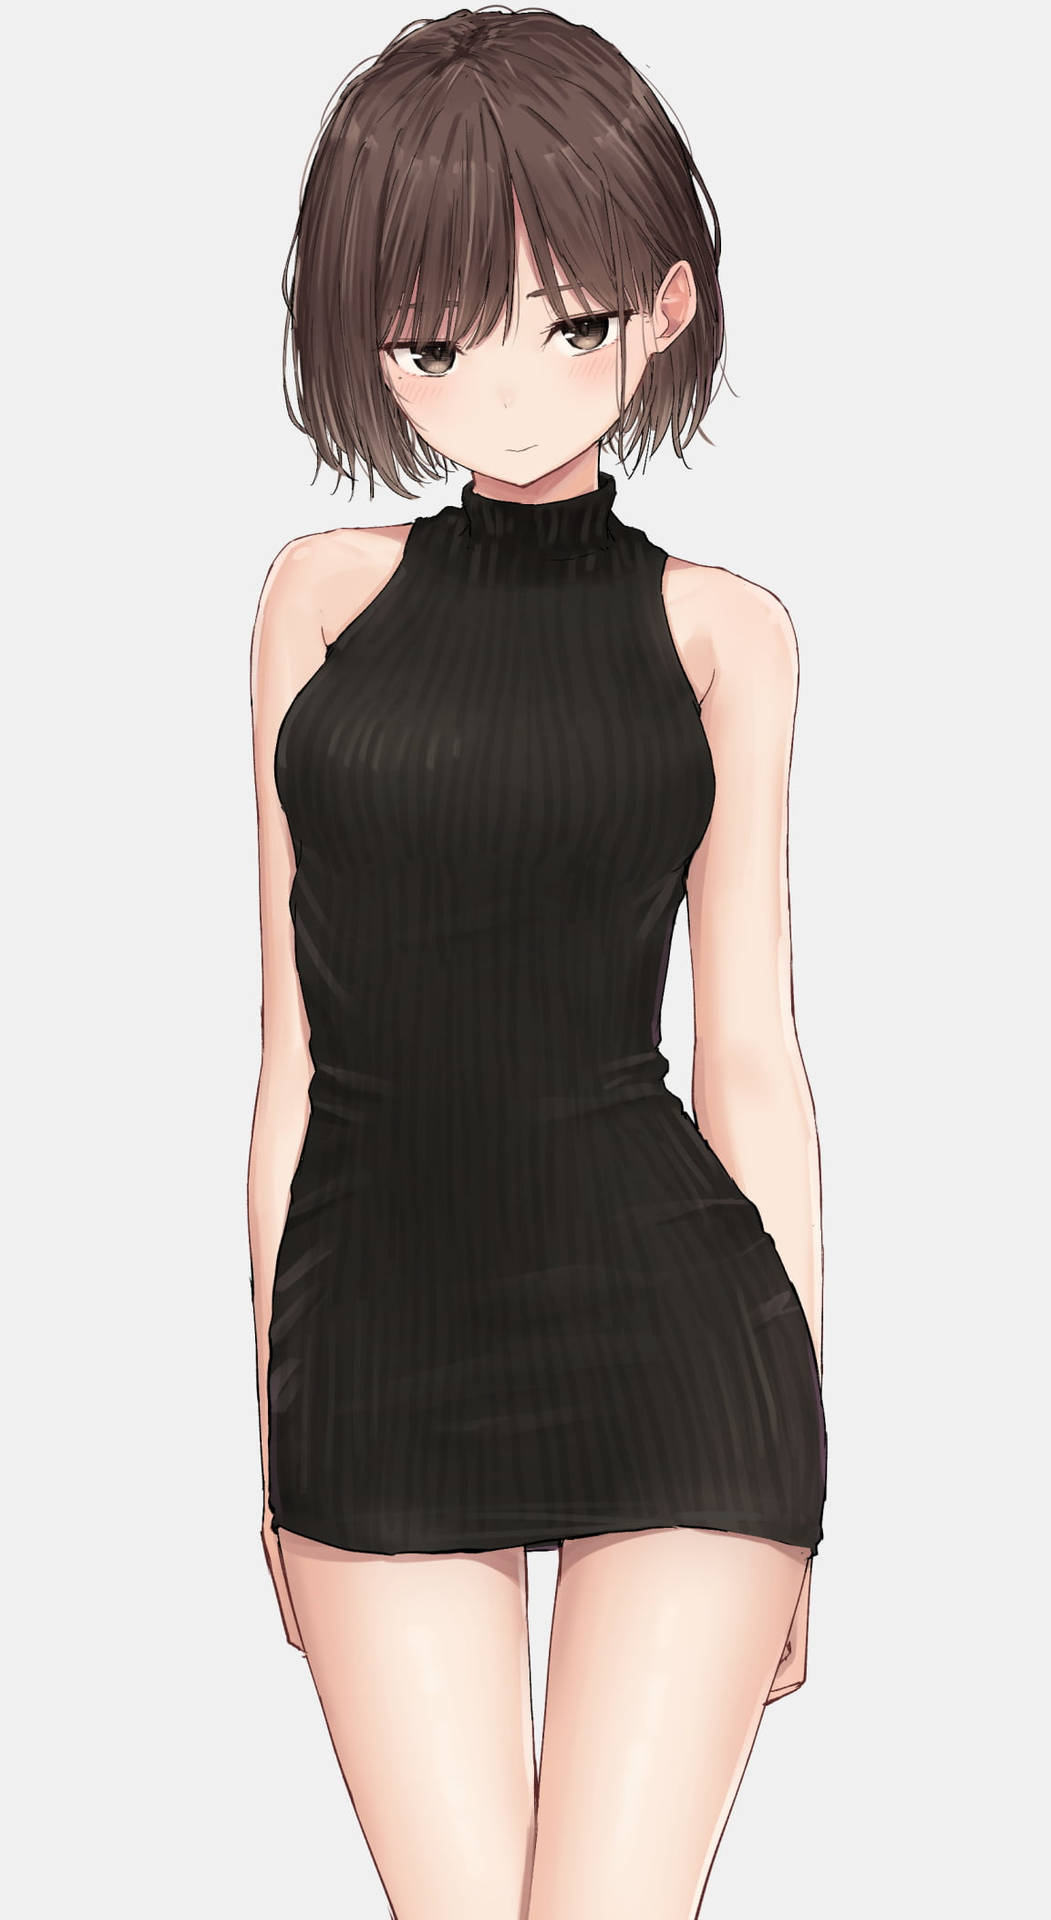 Aesthetic Anime Girl In Sexy Black Wallpaper